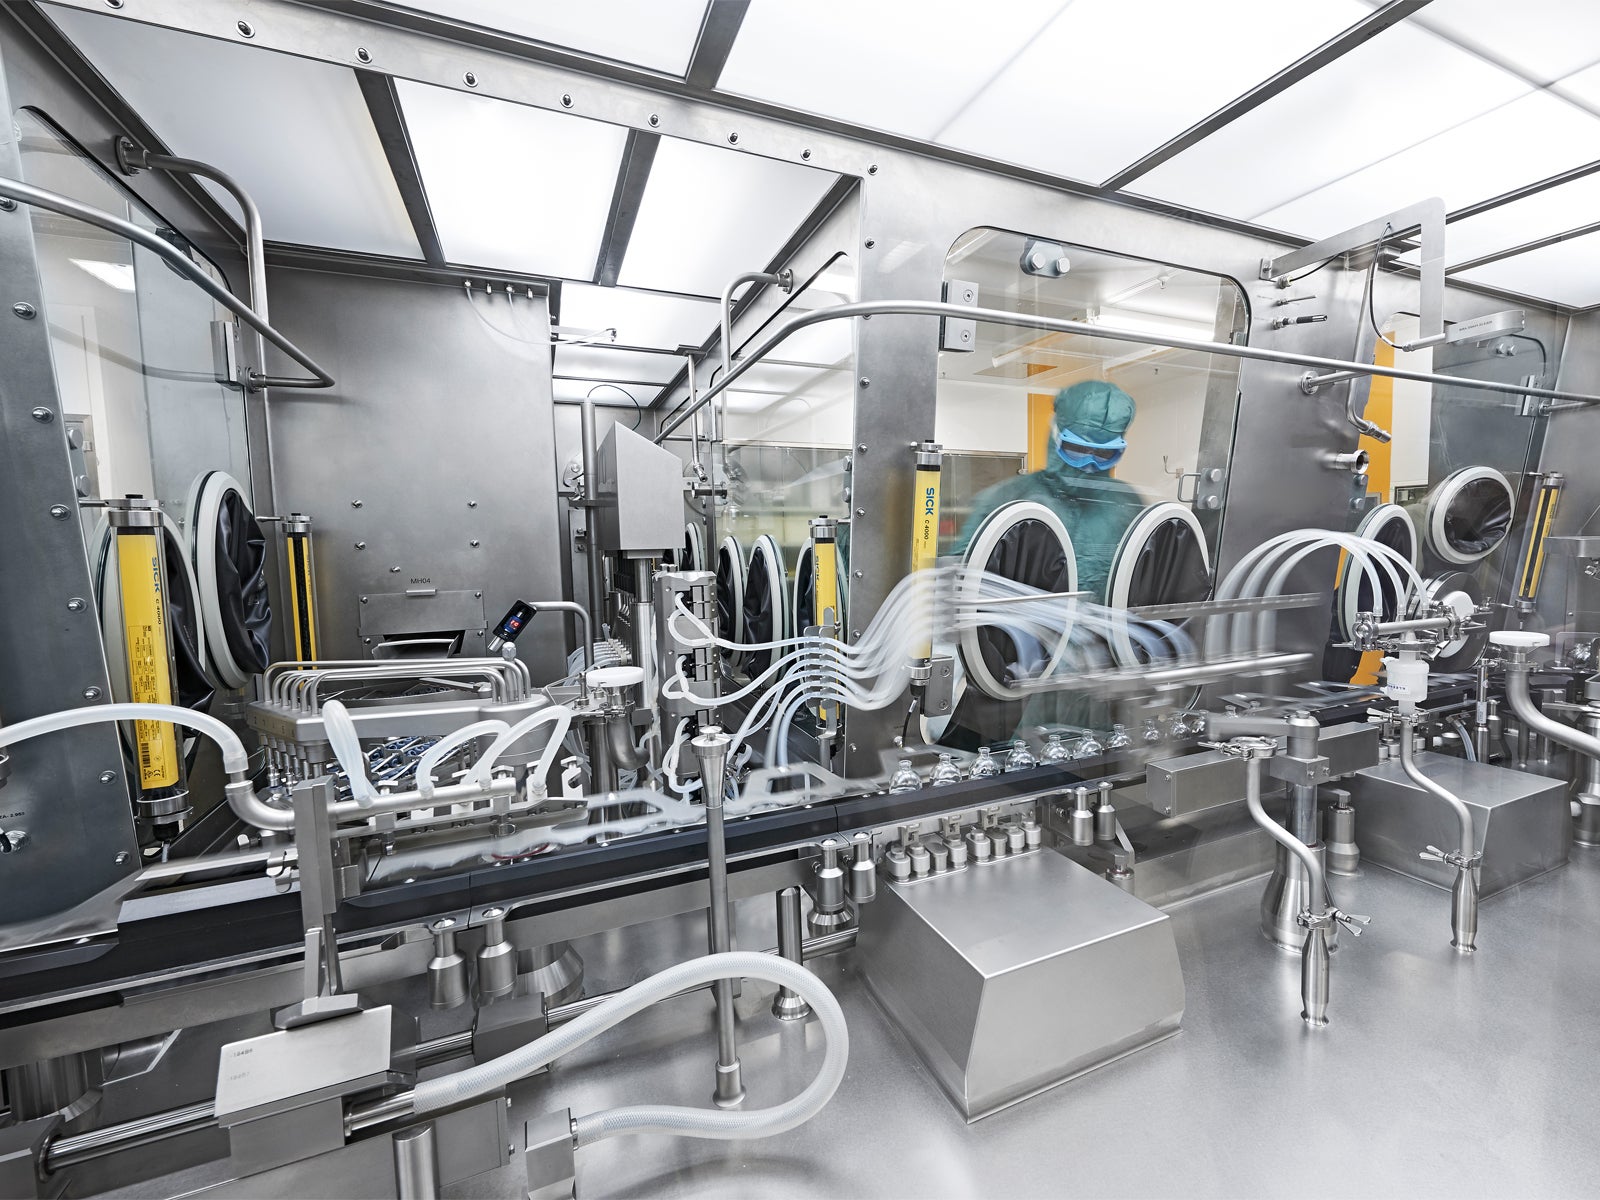 Preventing cross-contamination in multi-product facilities